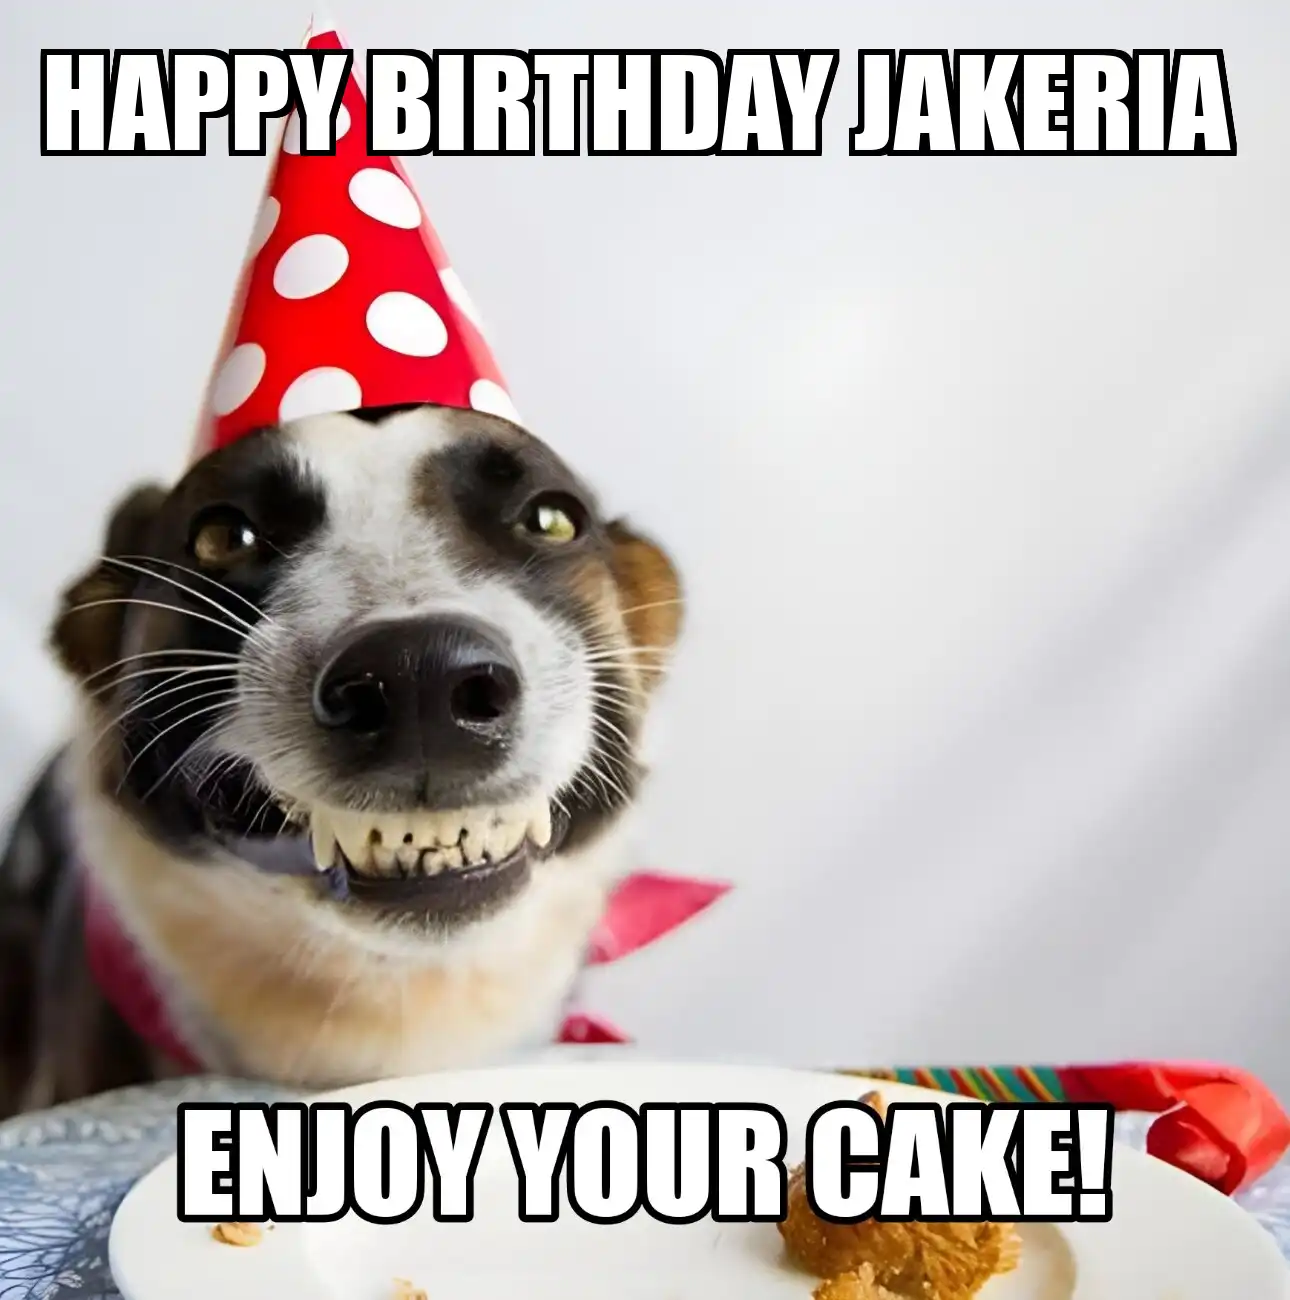 Happy Birthday Jakeria Enjoy Your Cake Dog Meme